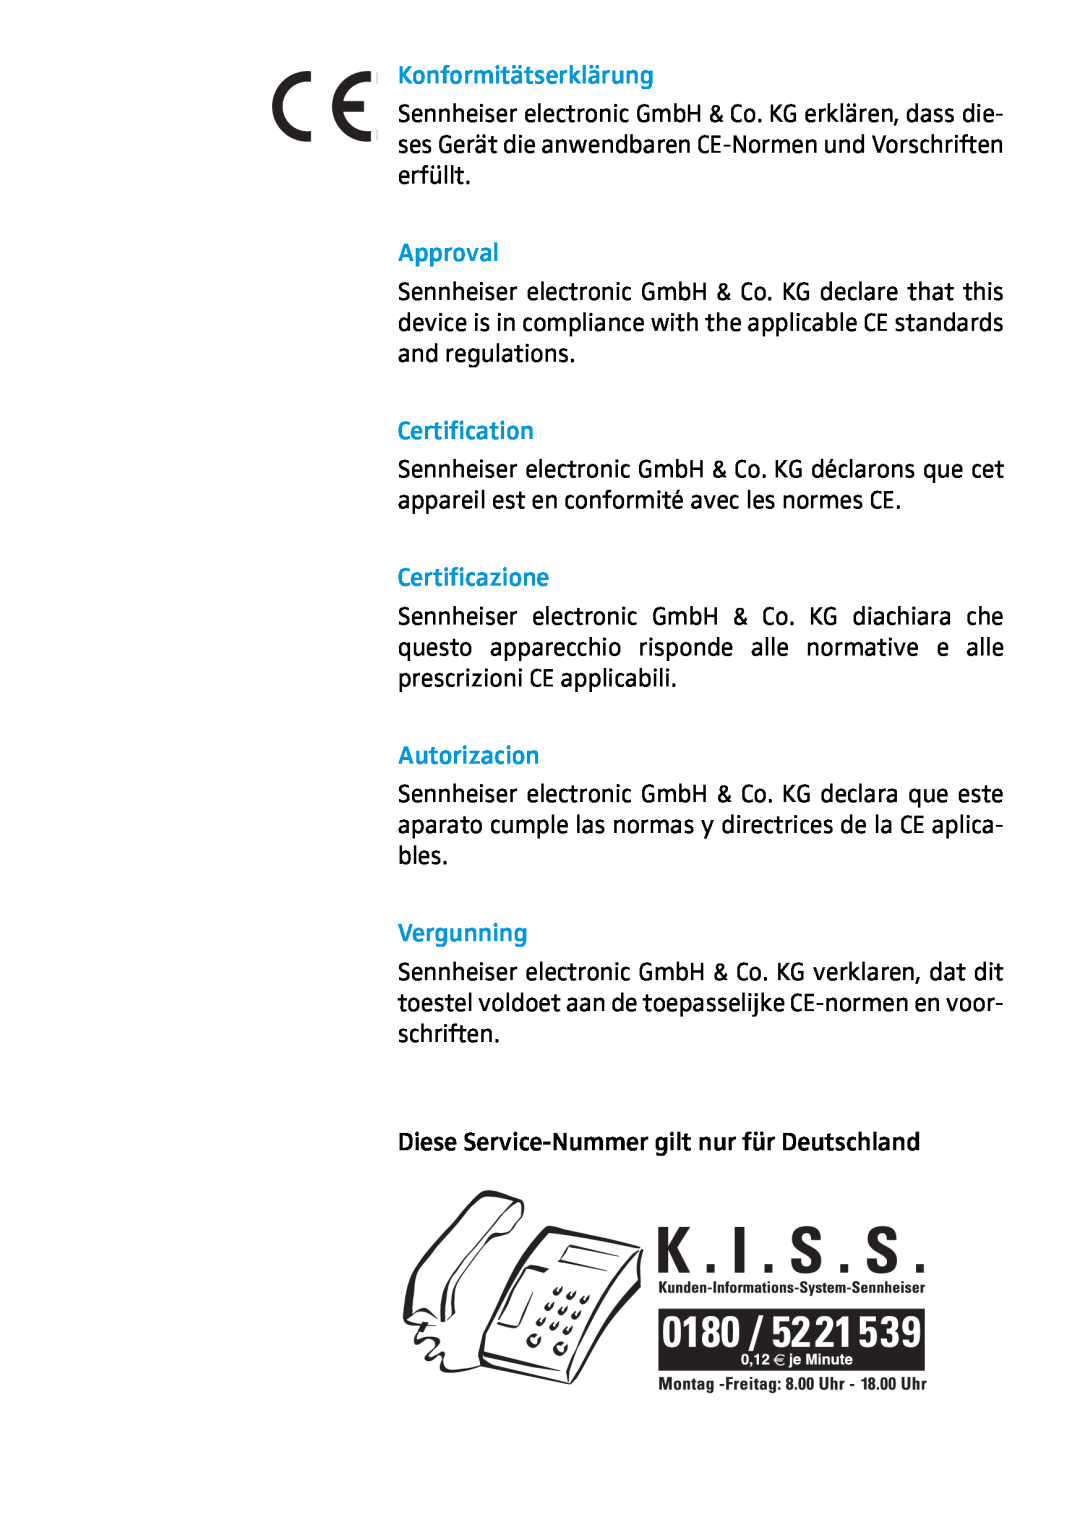 Sennheiser ASP 2 manual Konformitätserklärung, Approval, Certification, Certificazione, Autorizacion, Vergunning 